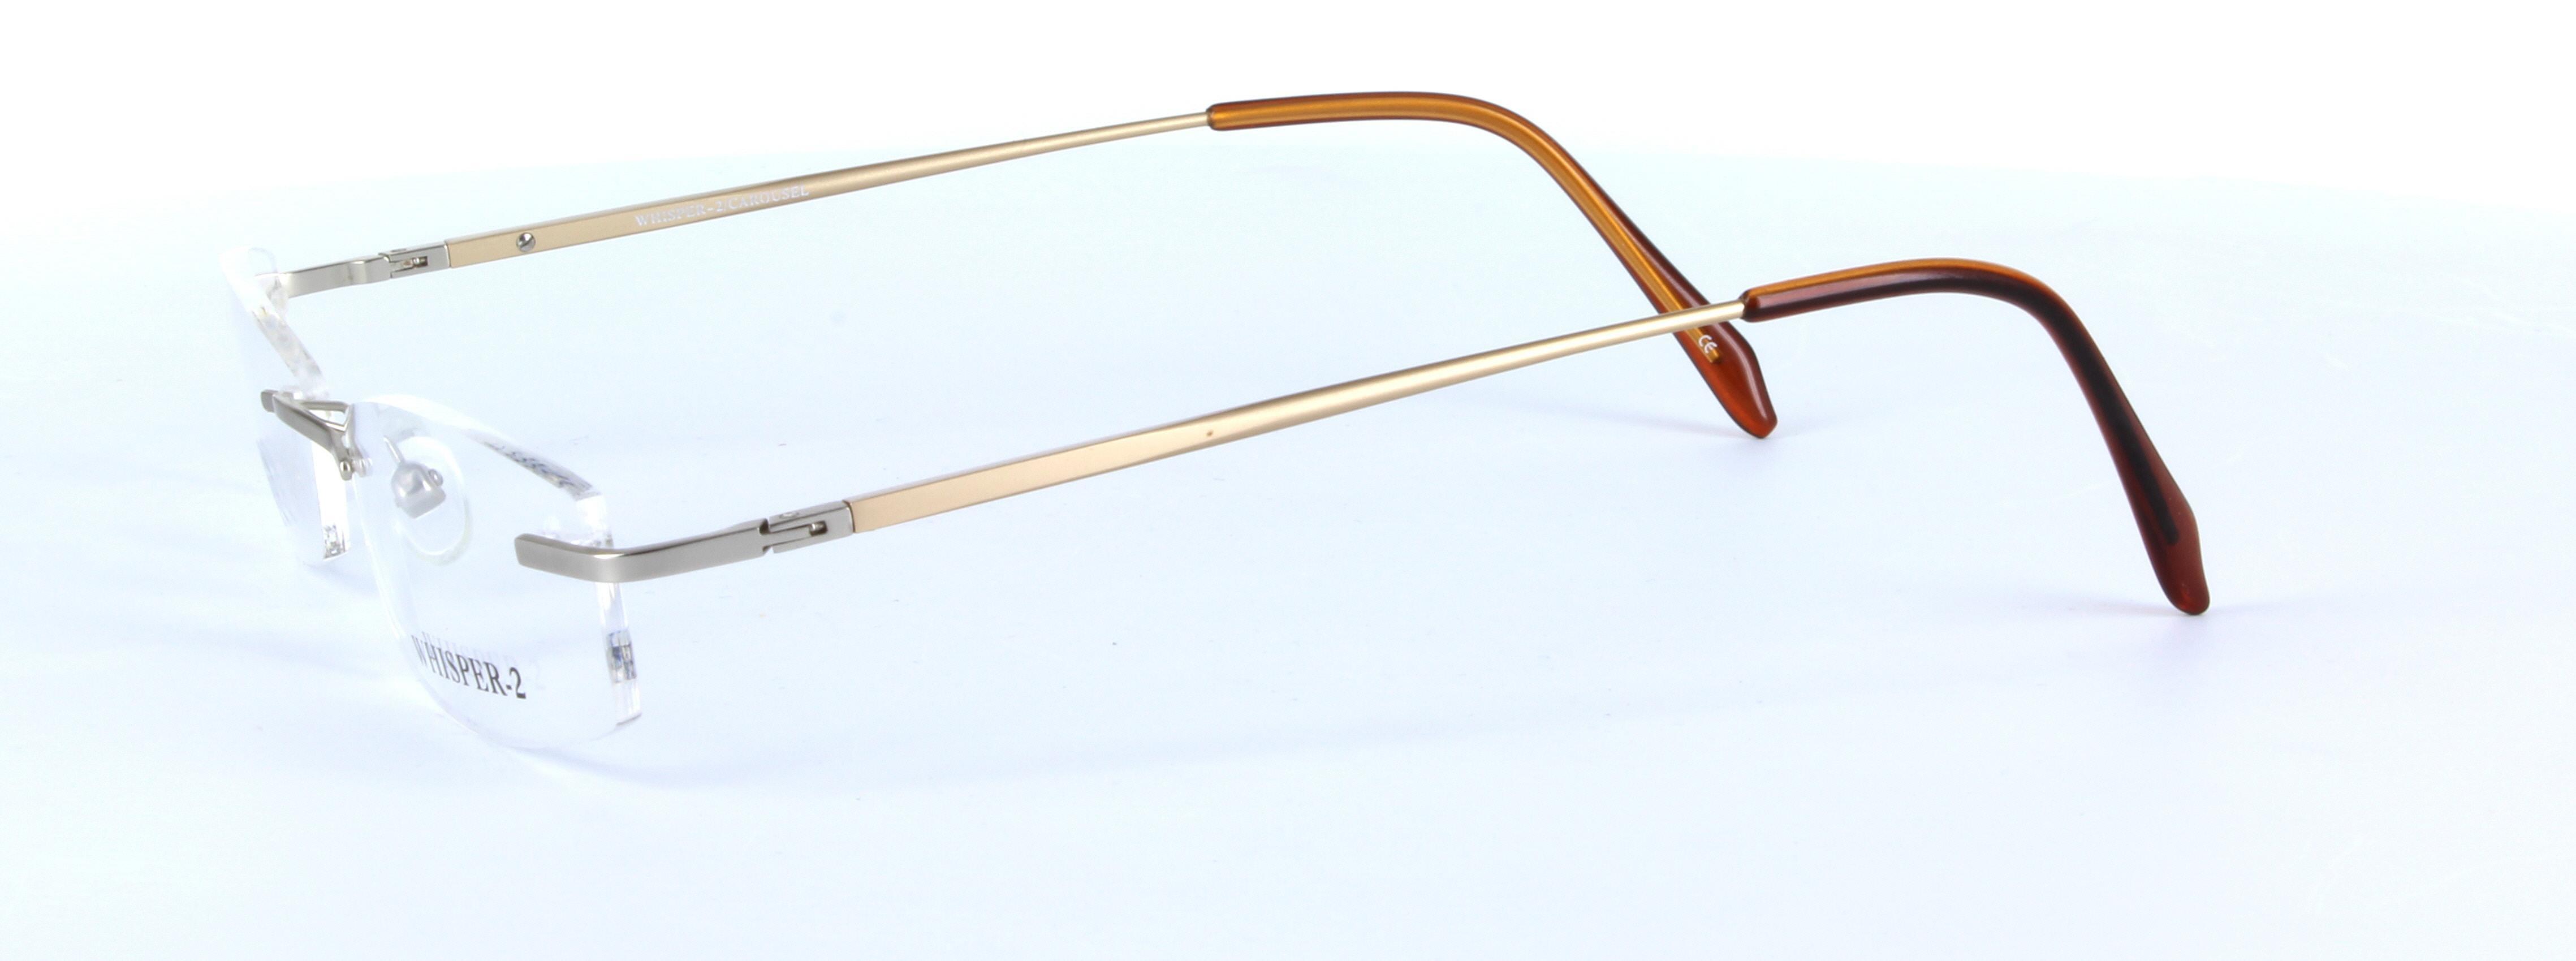 Lidia Silver Rimless Rectangular Metal Glasses - Image View 2